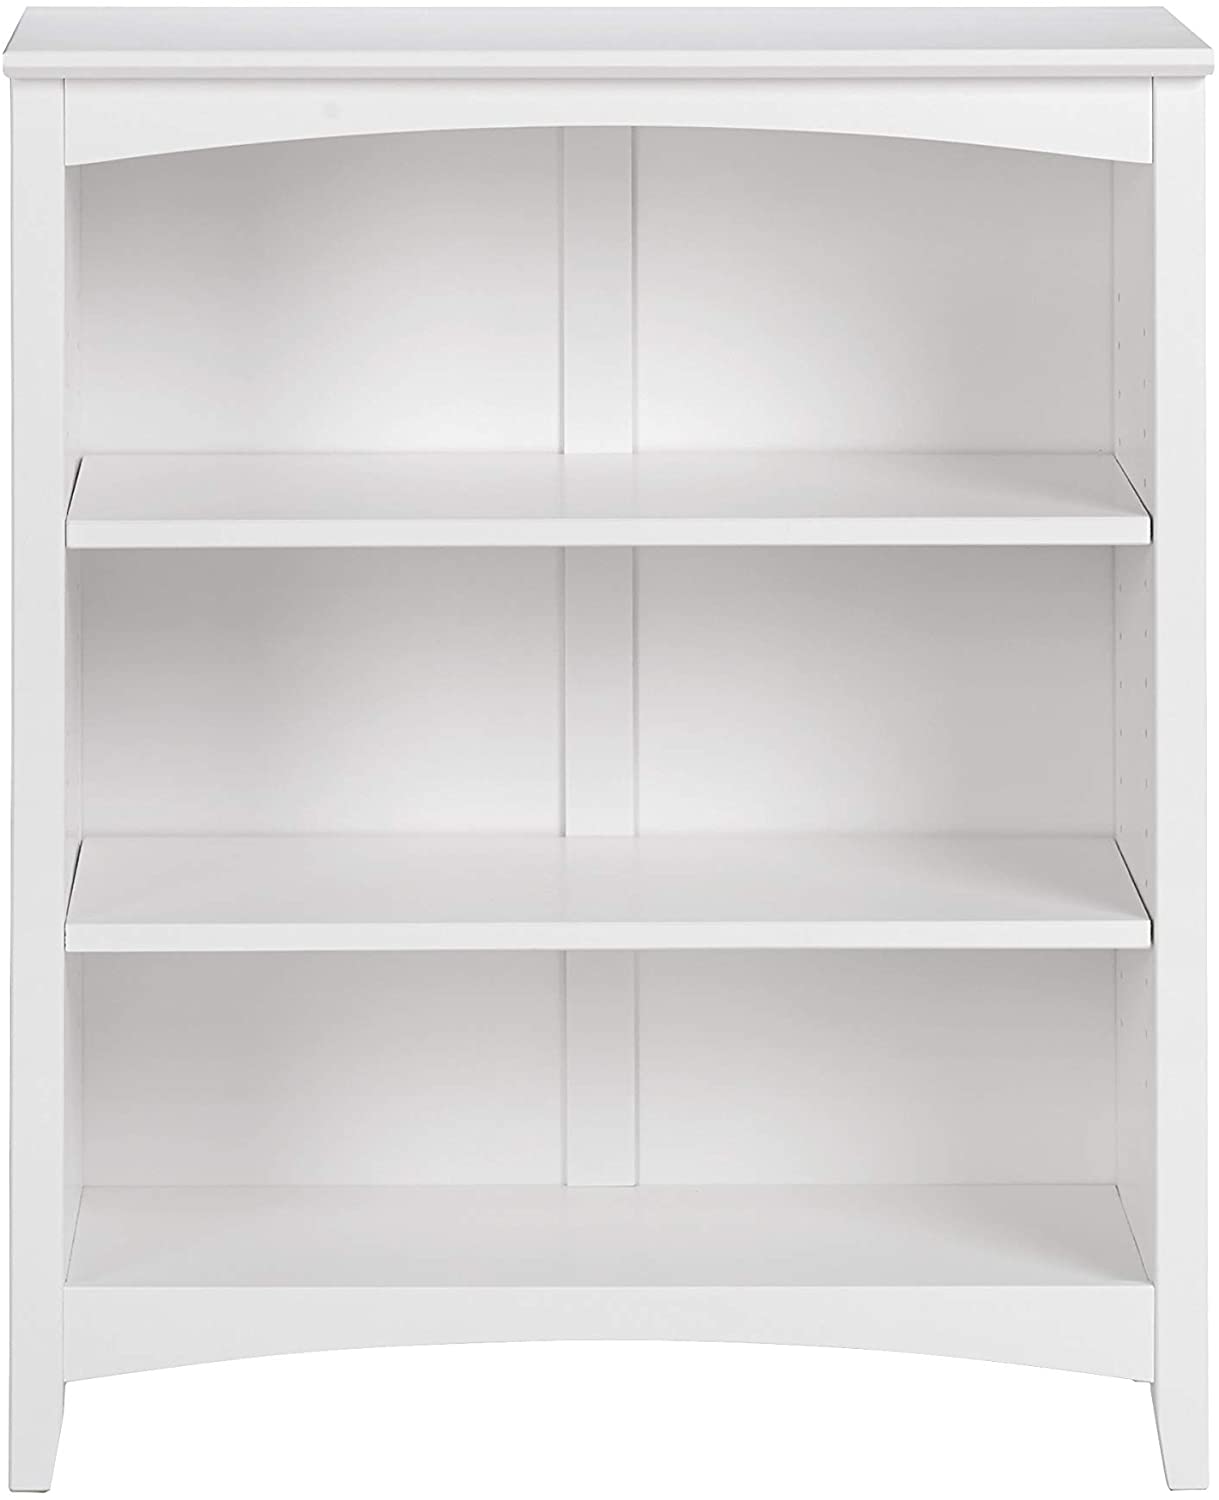 Bookshelf: Shaker Style 3-Shelf Bookcase